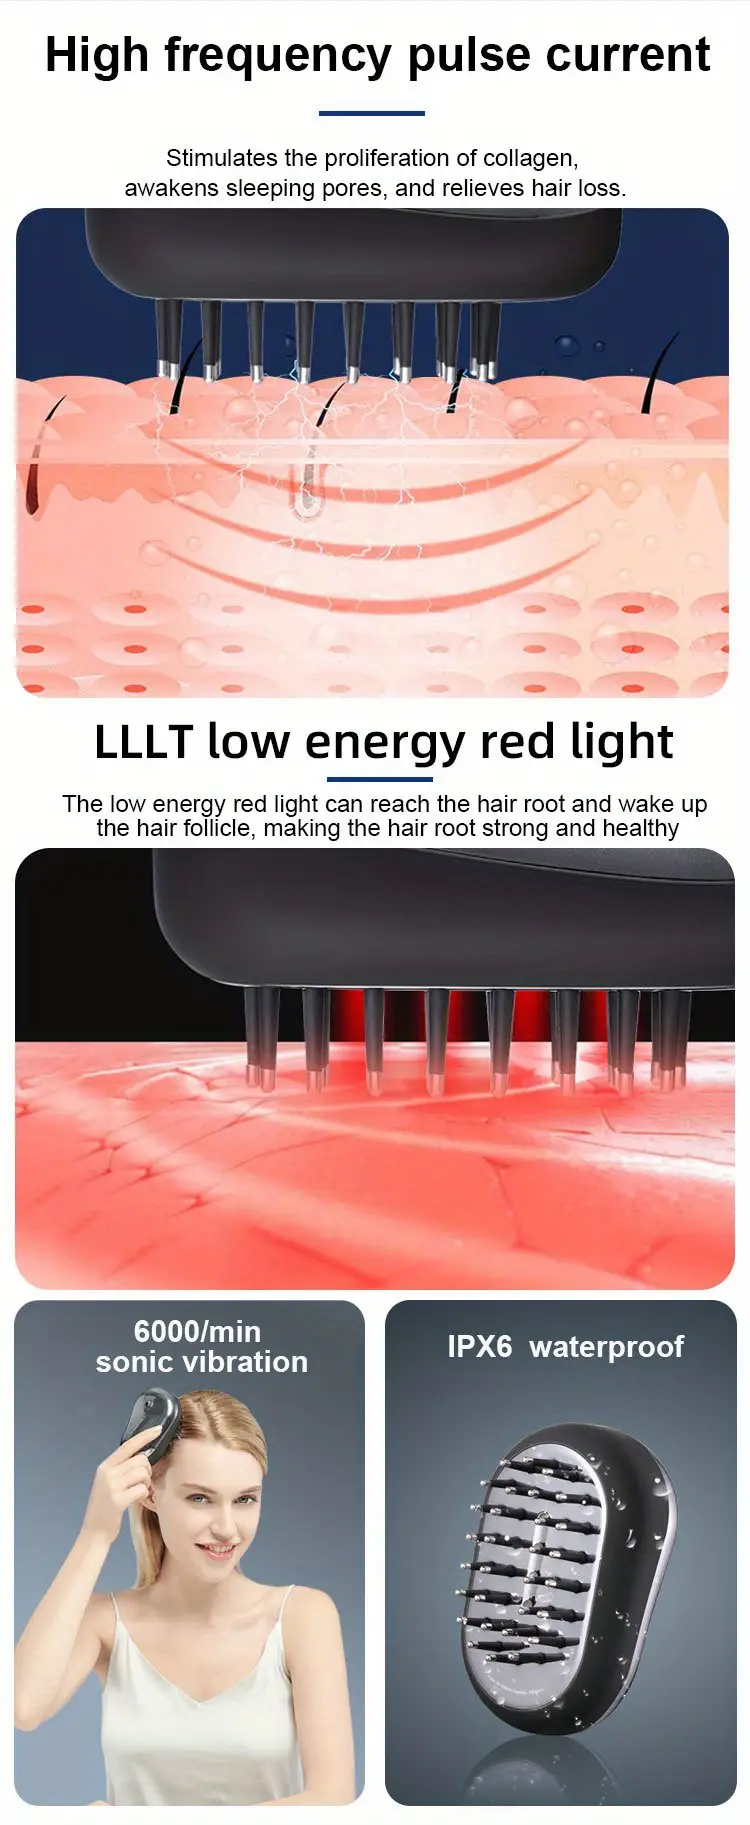 lllt laser hair comb infrared ems scalp care portable vibration massage hair generator details 2